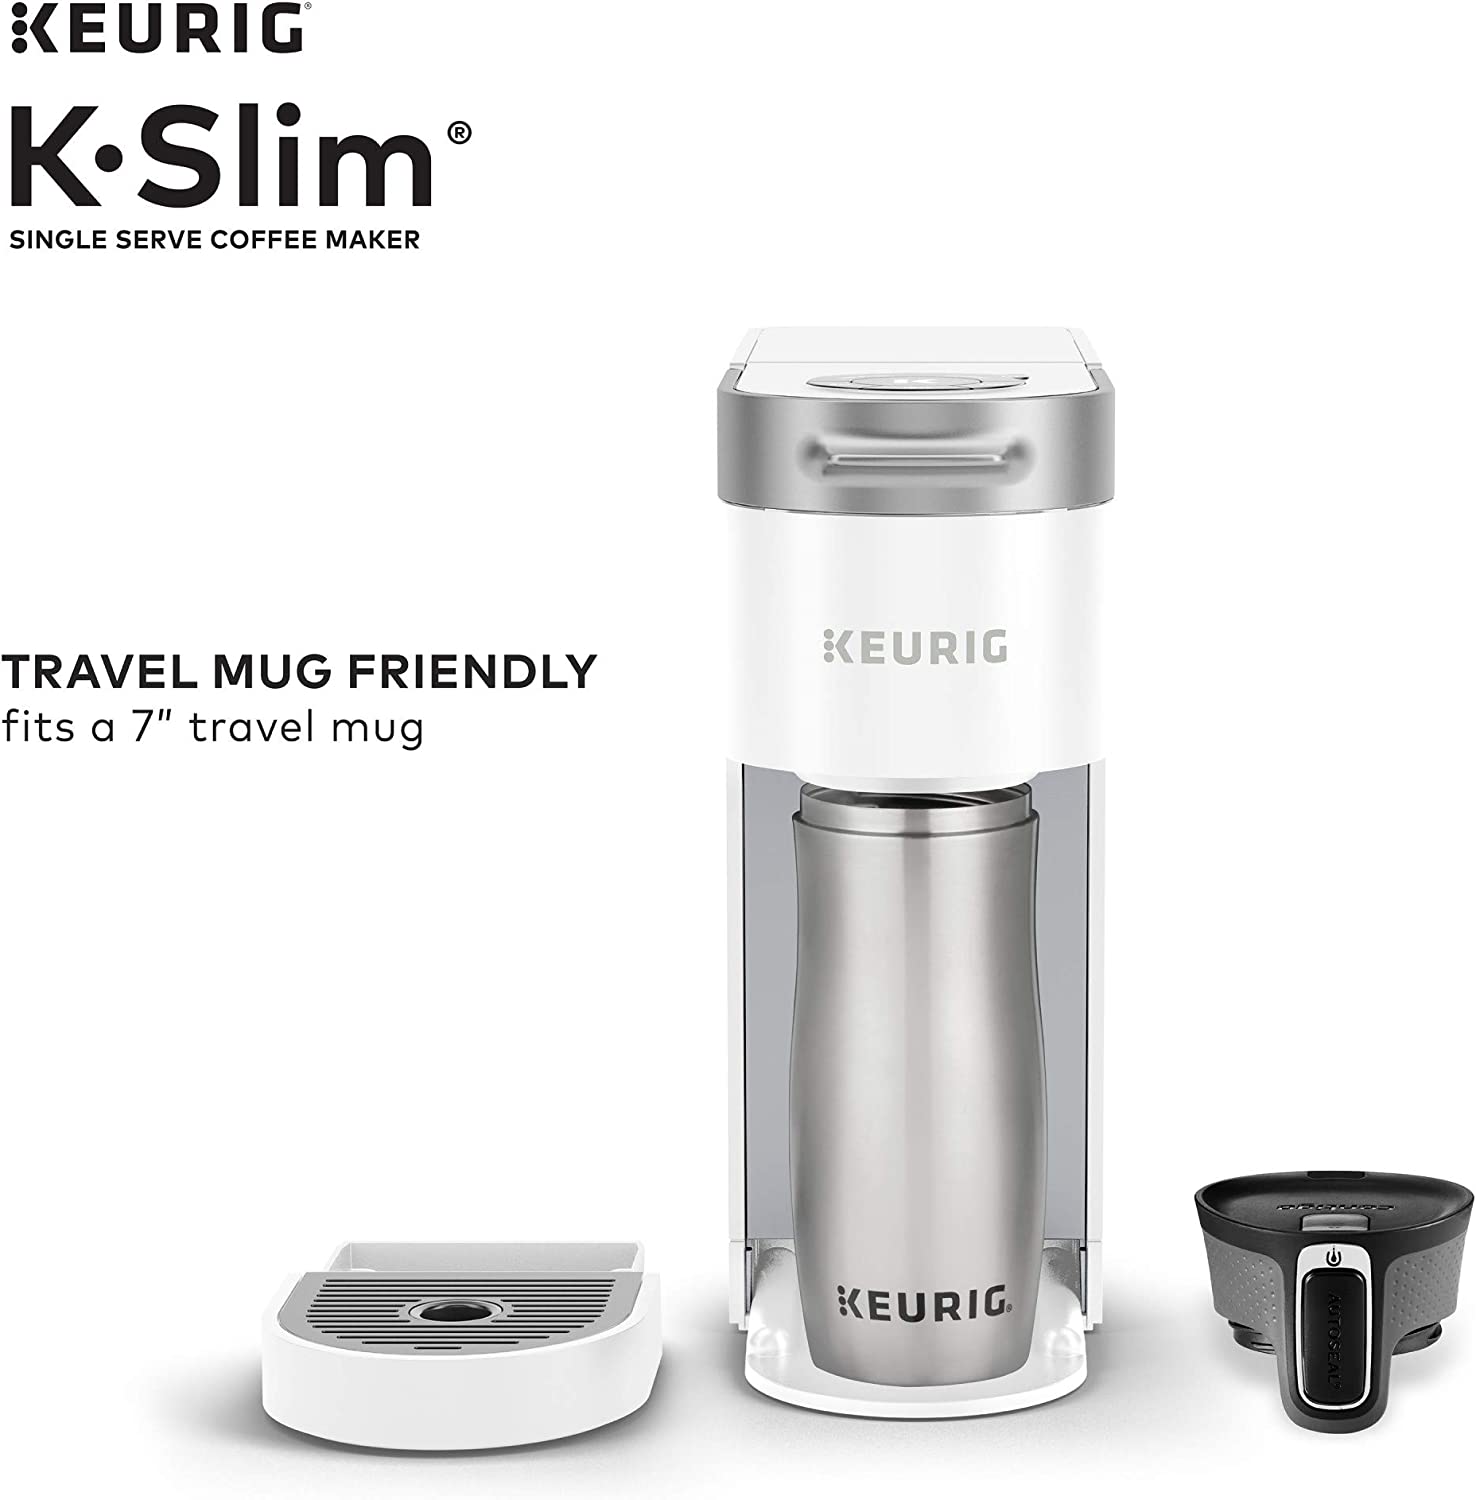 Keurig K- Slim Single Serve K-Cup Pod Coffee Maker, Multistream Technology,  White